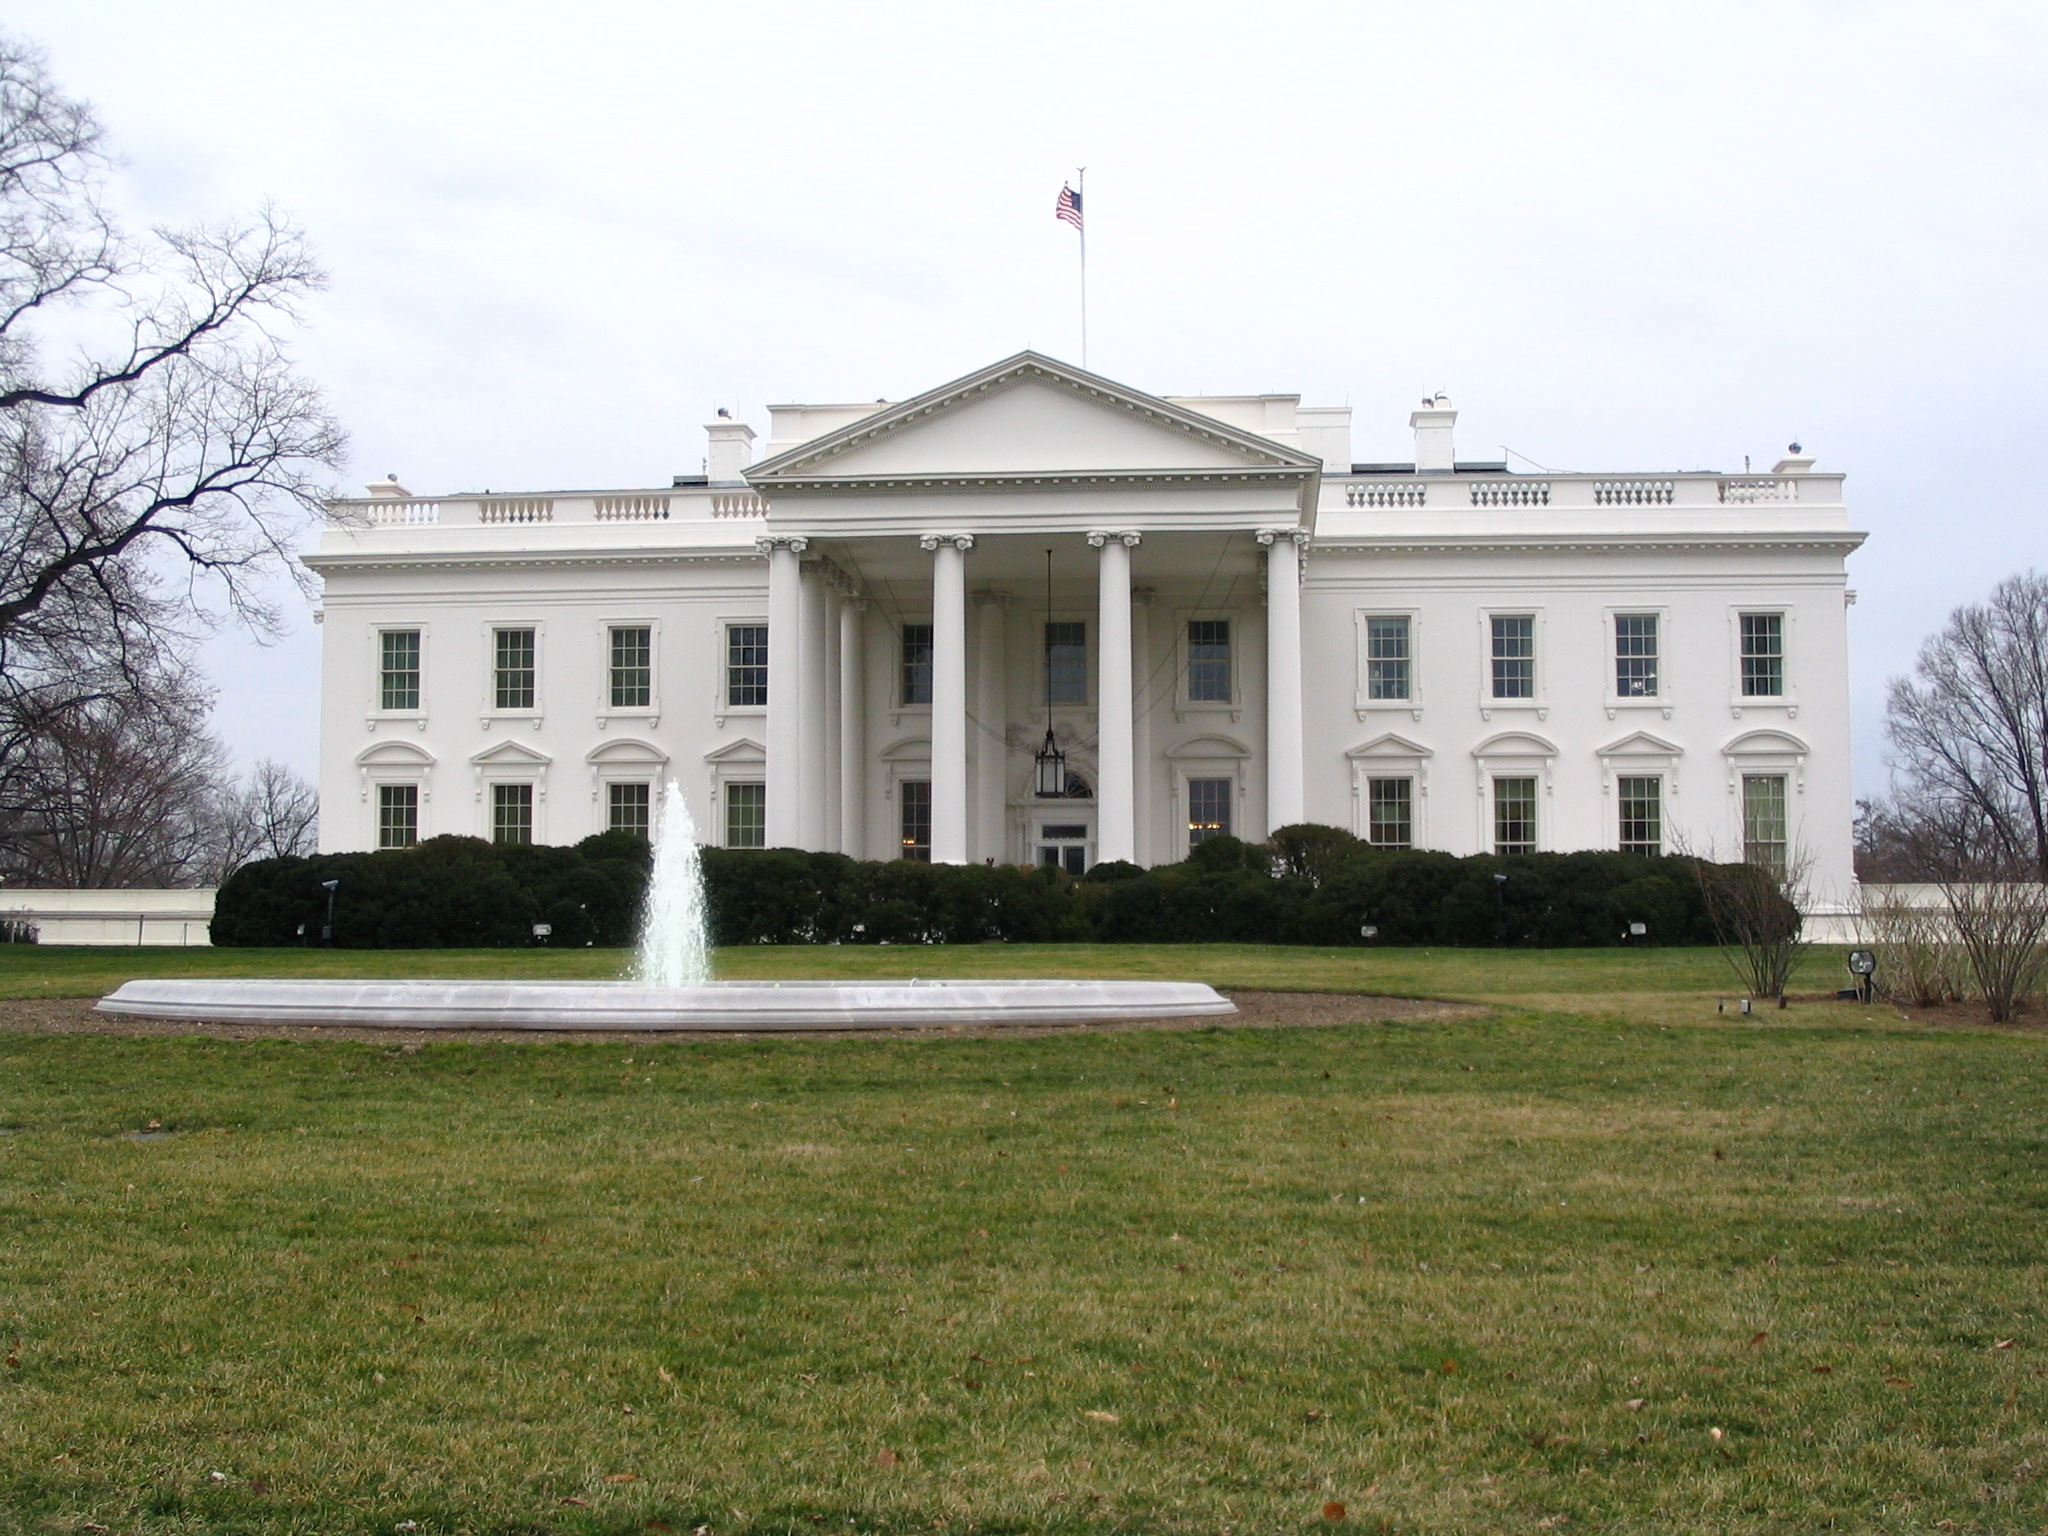 File:White House 06.02.08.jpg - Wikipedia